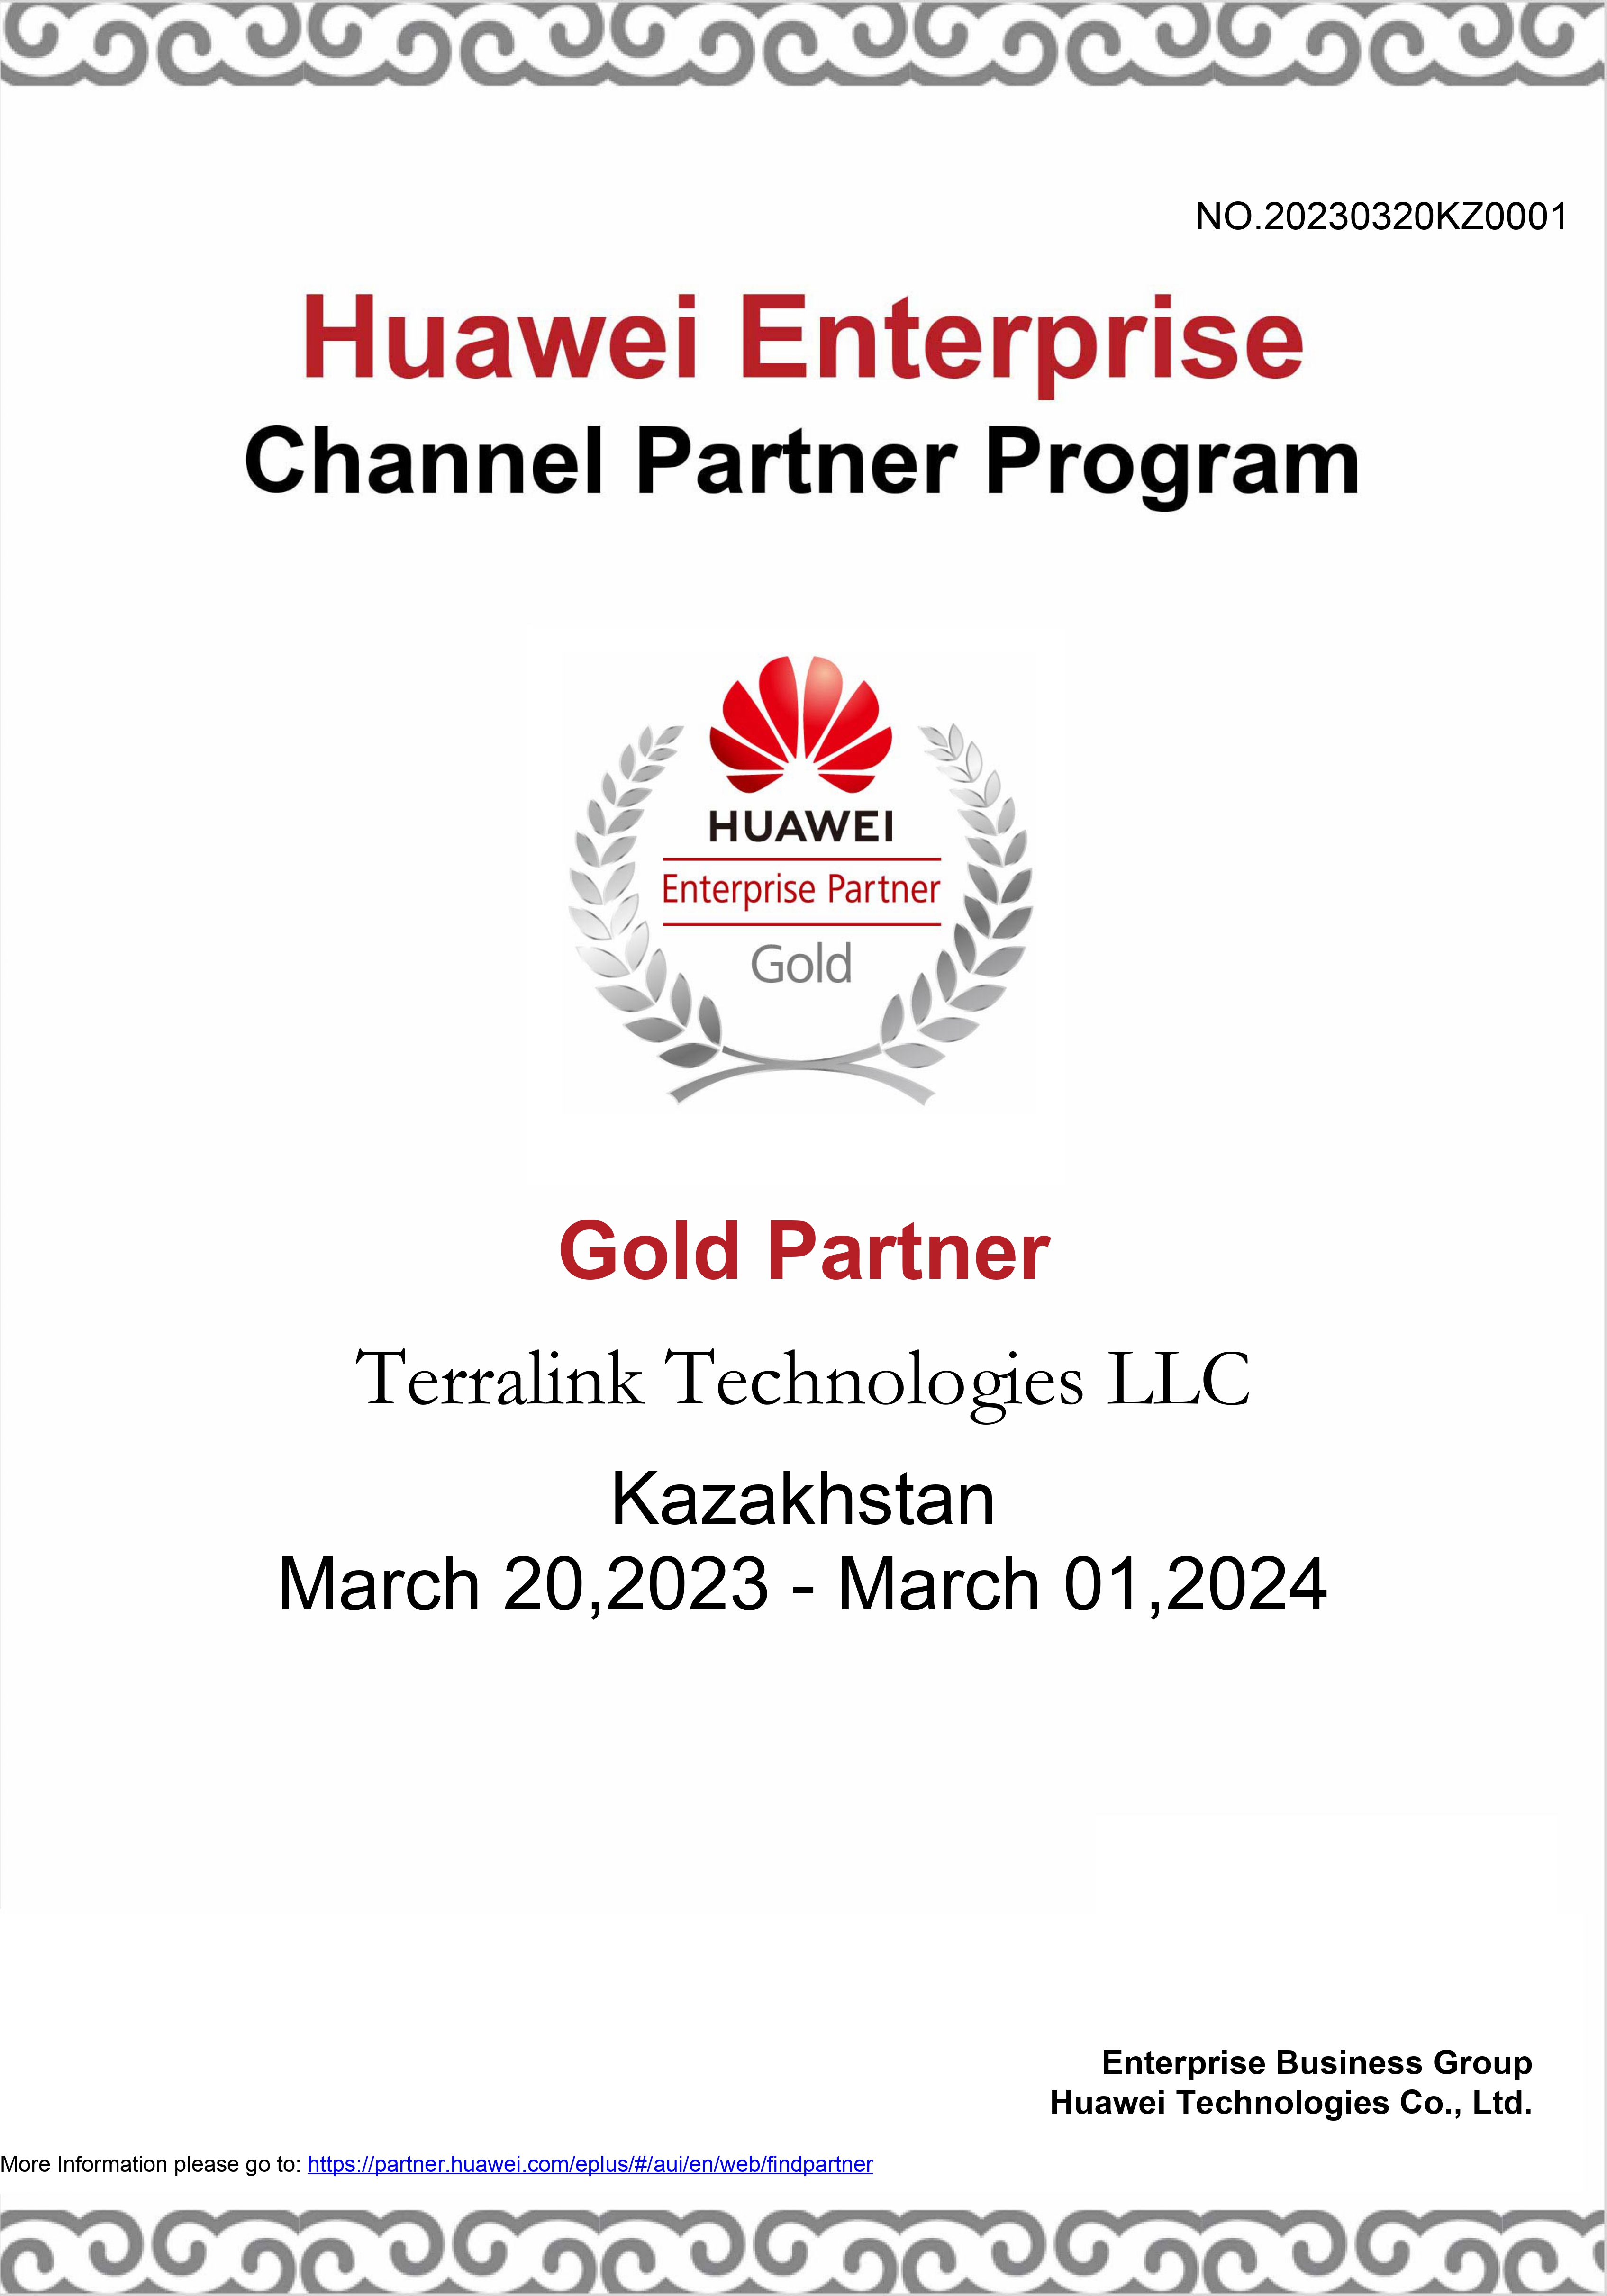 Gold Partner TerraLink Technologies LLC